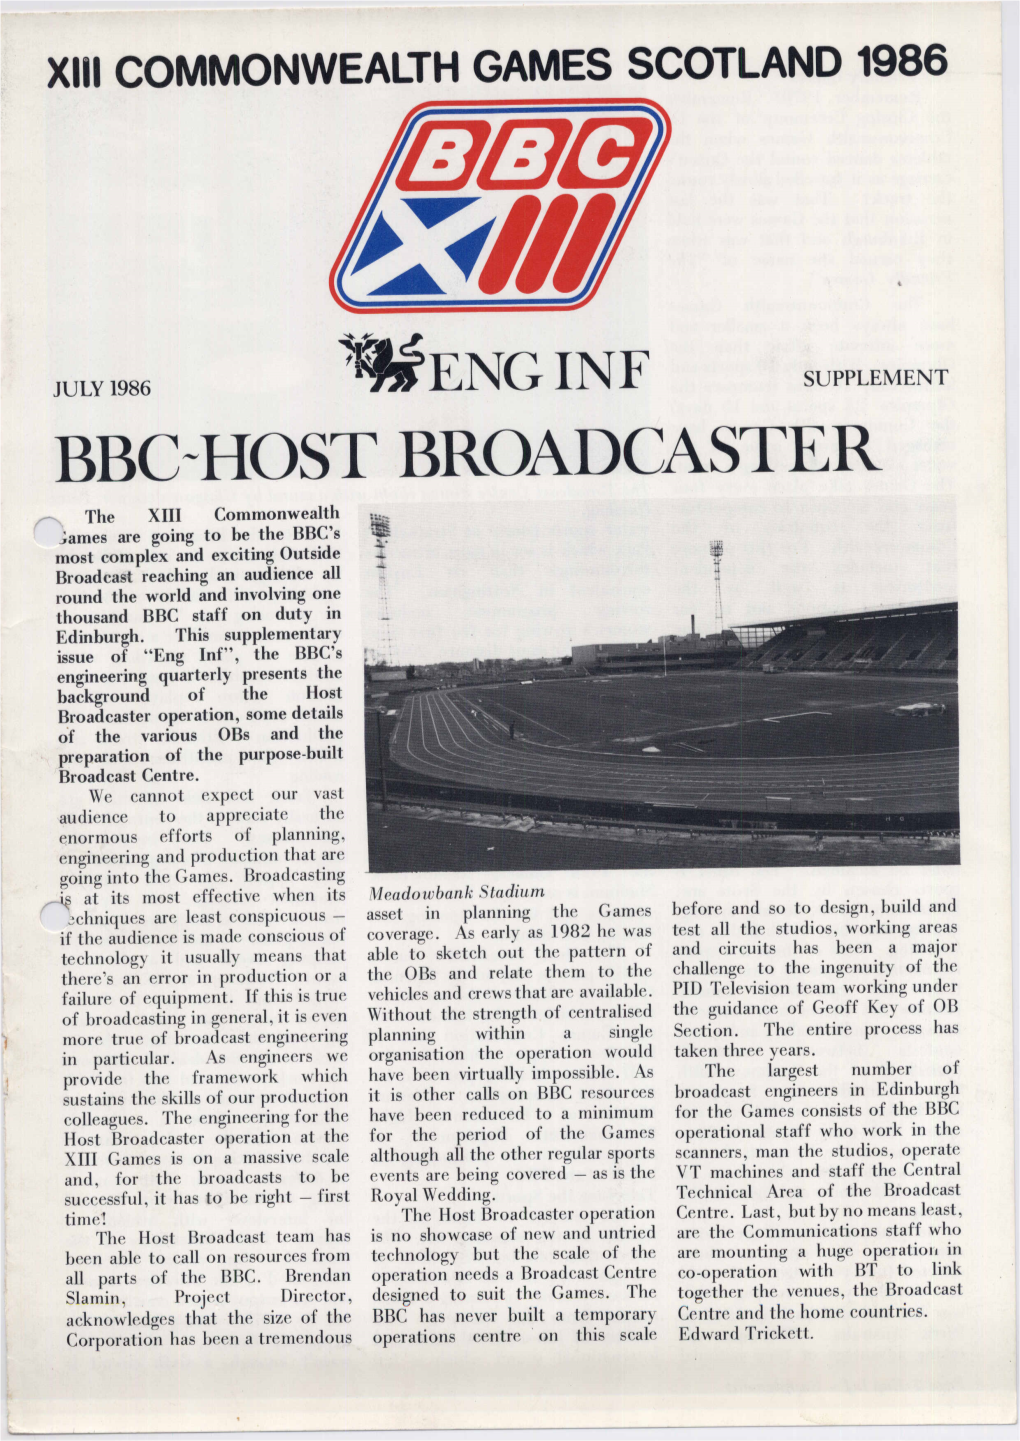 Bbc-Host Broadcaster